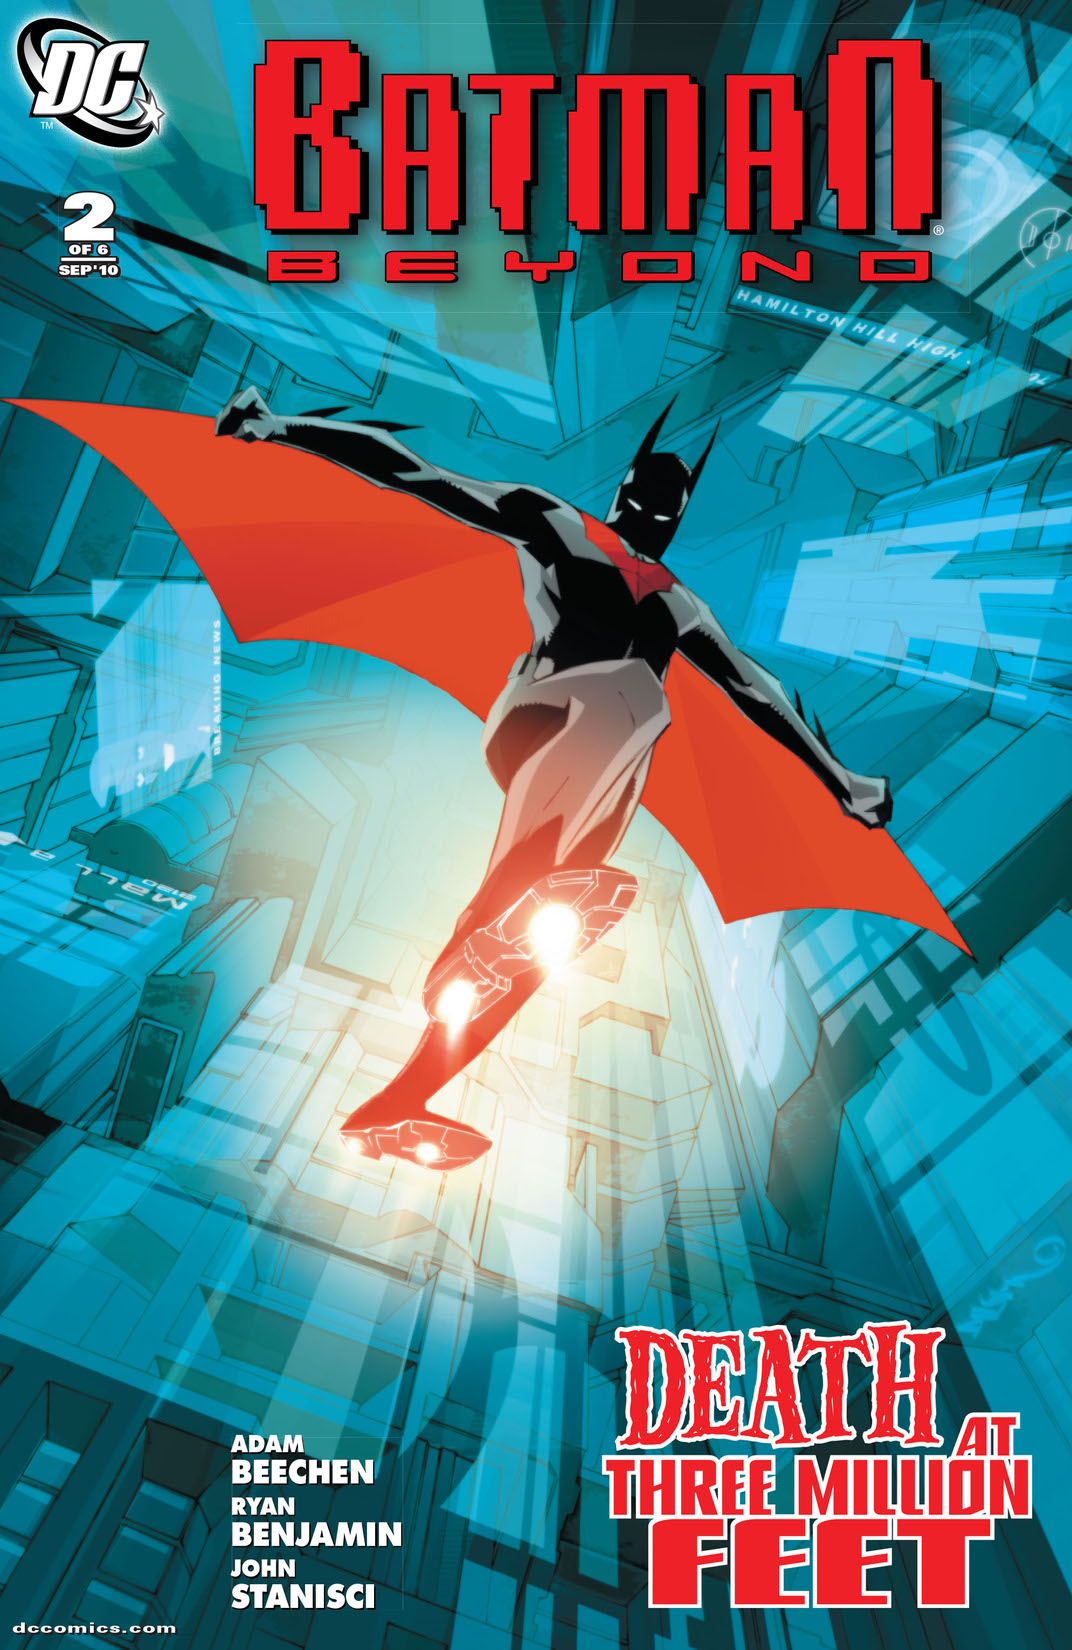 Batman Beyond (2010-) #2 preview images